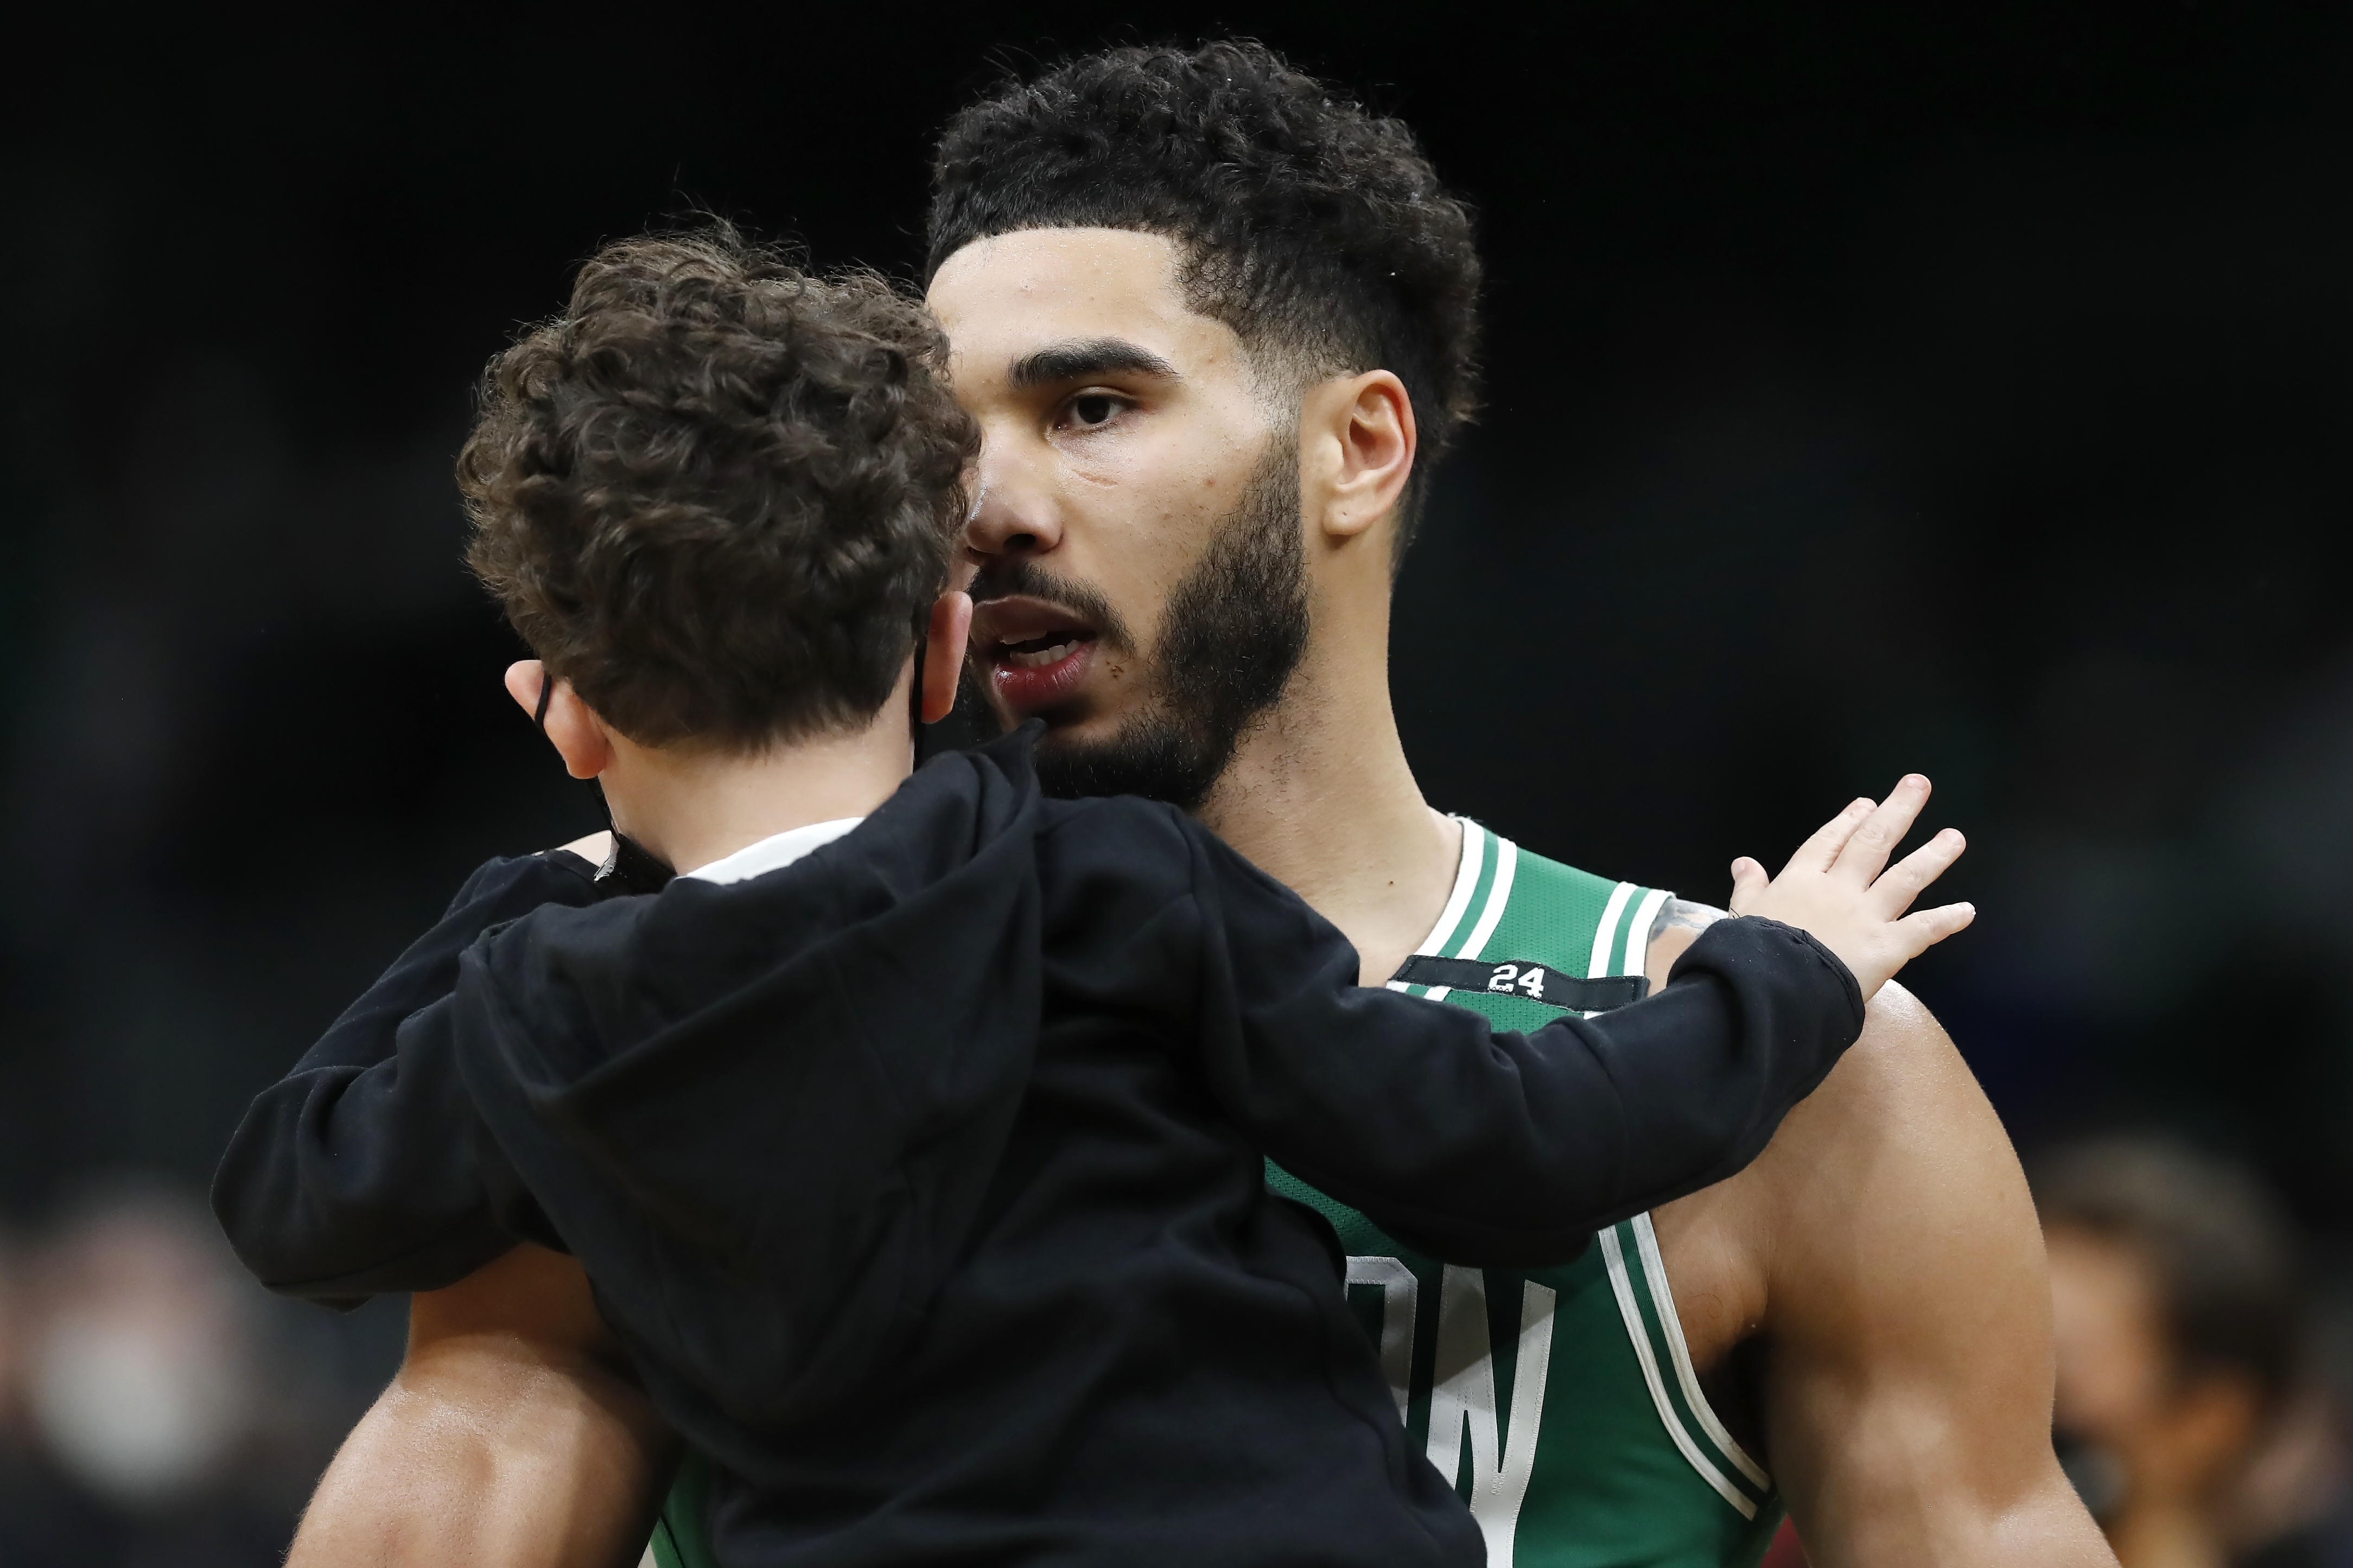 Celtics' Jayson Tatum savagely blocks son's shot: Video